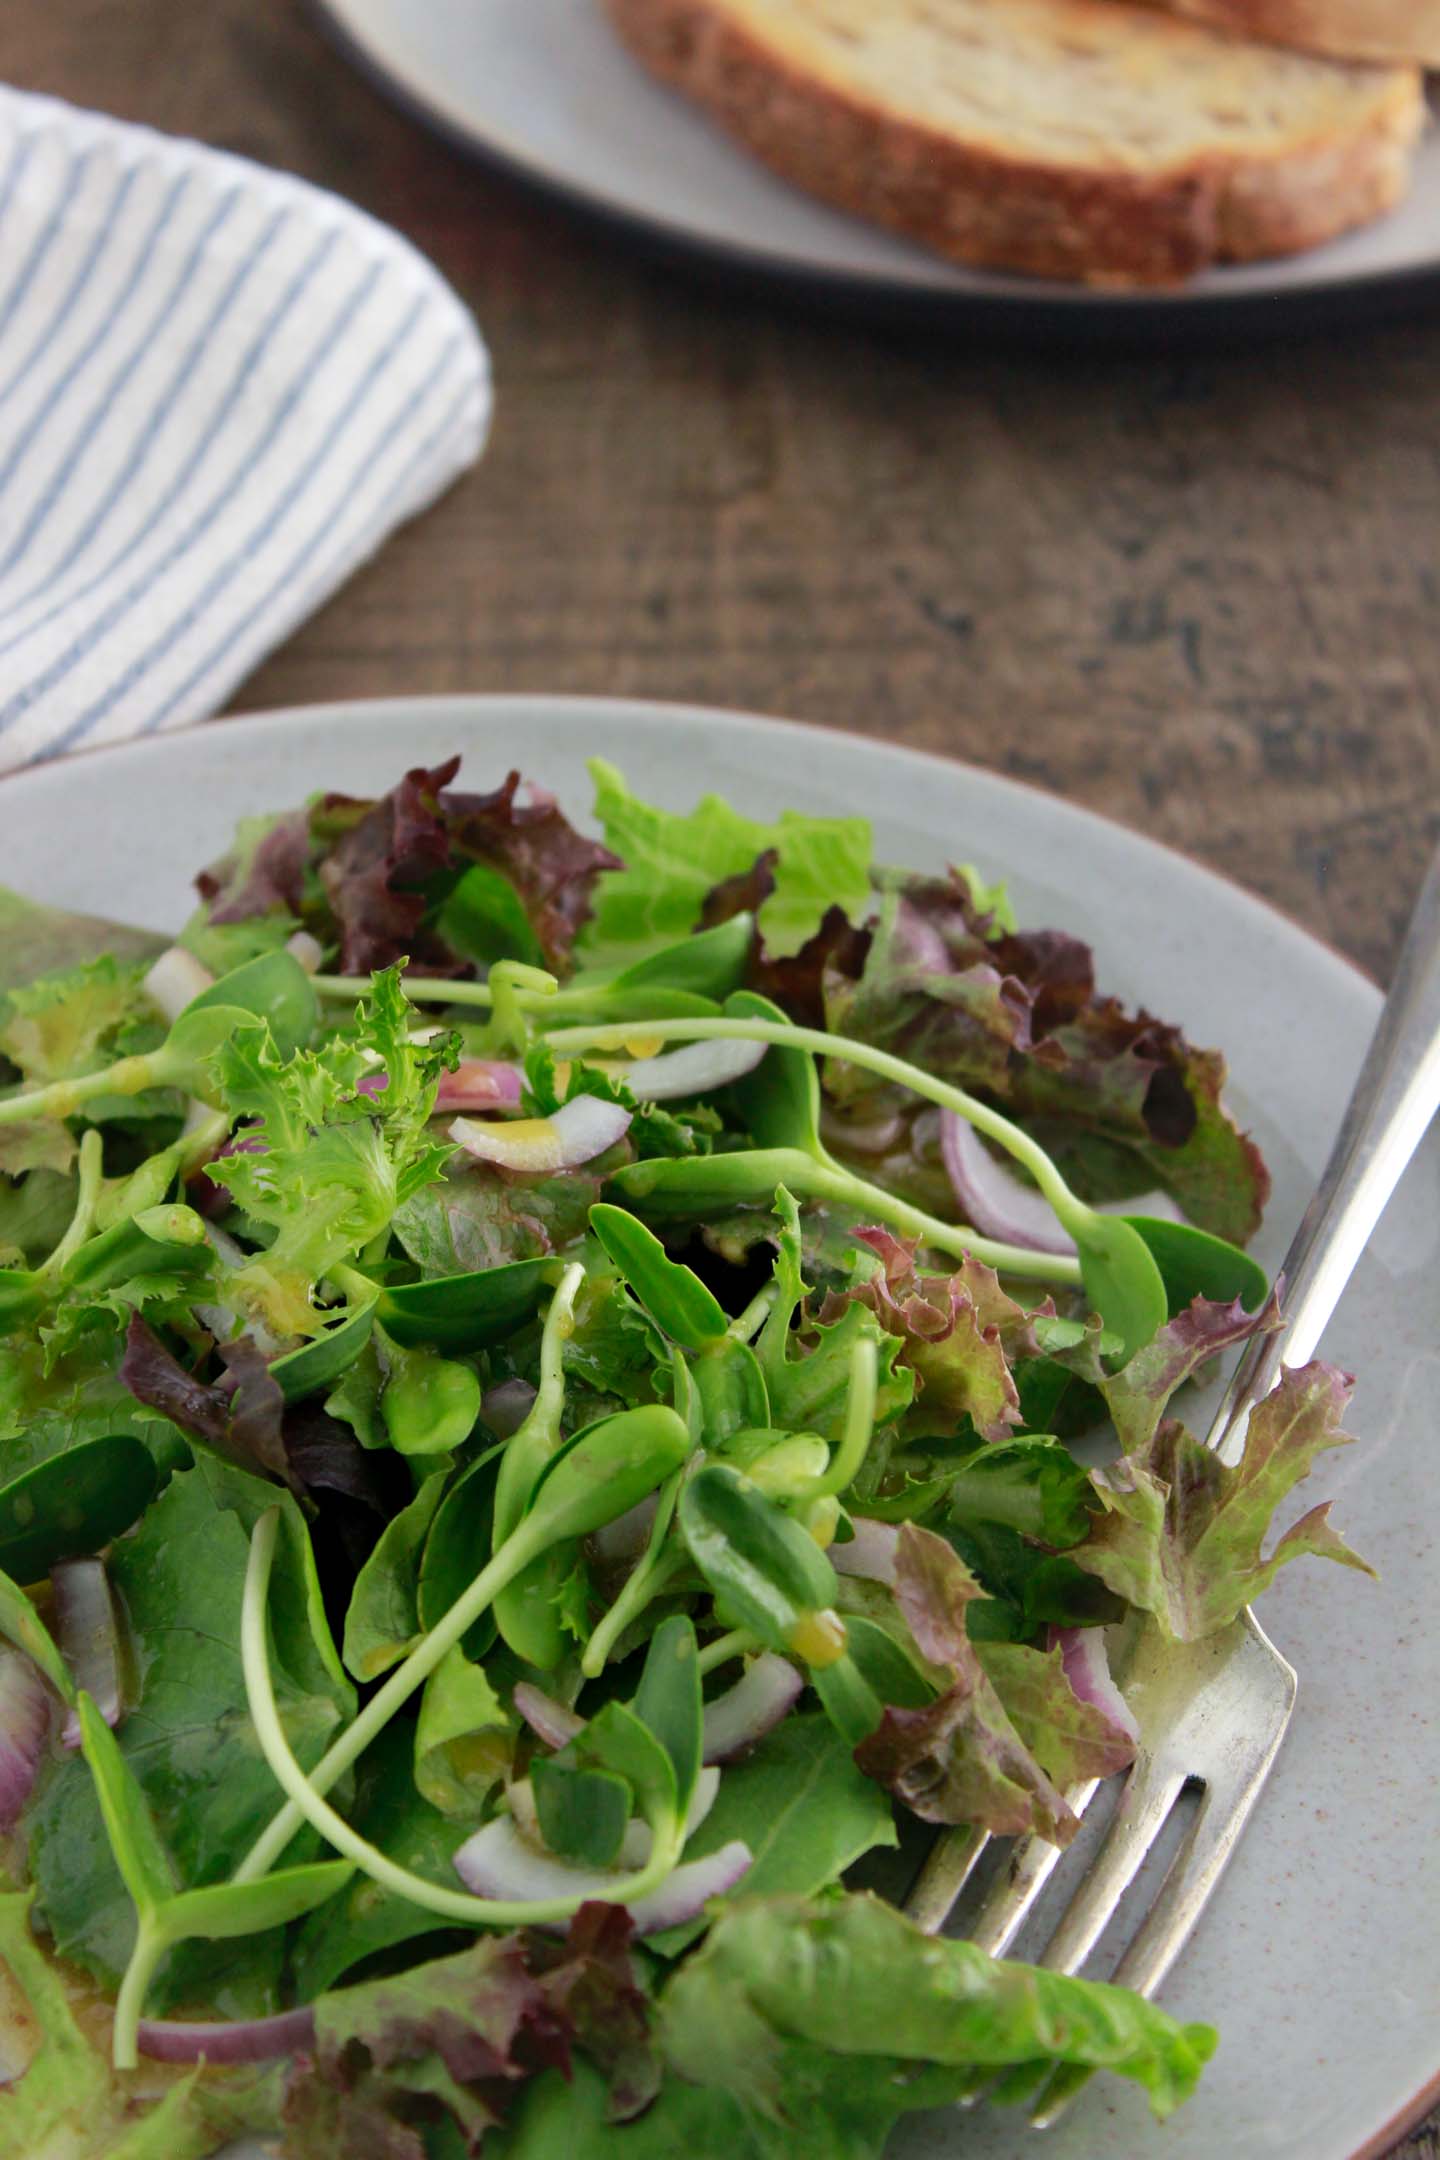 Plated Salanova® salad with Salanova® baby lettuces, sunflower shoots and red onion.